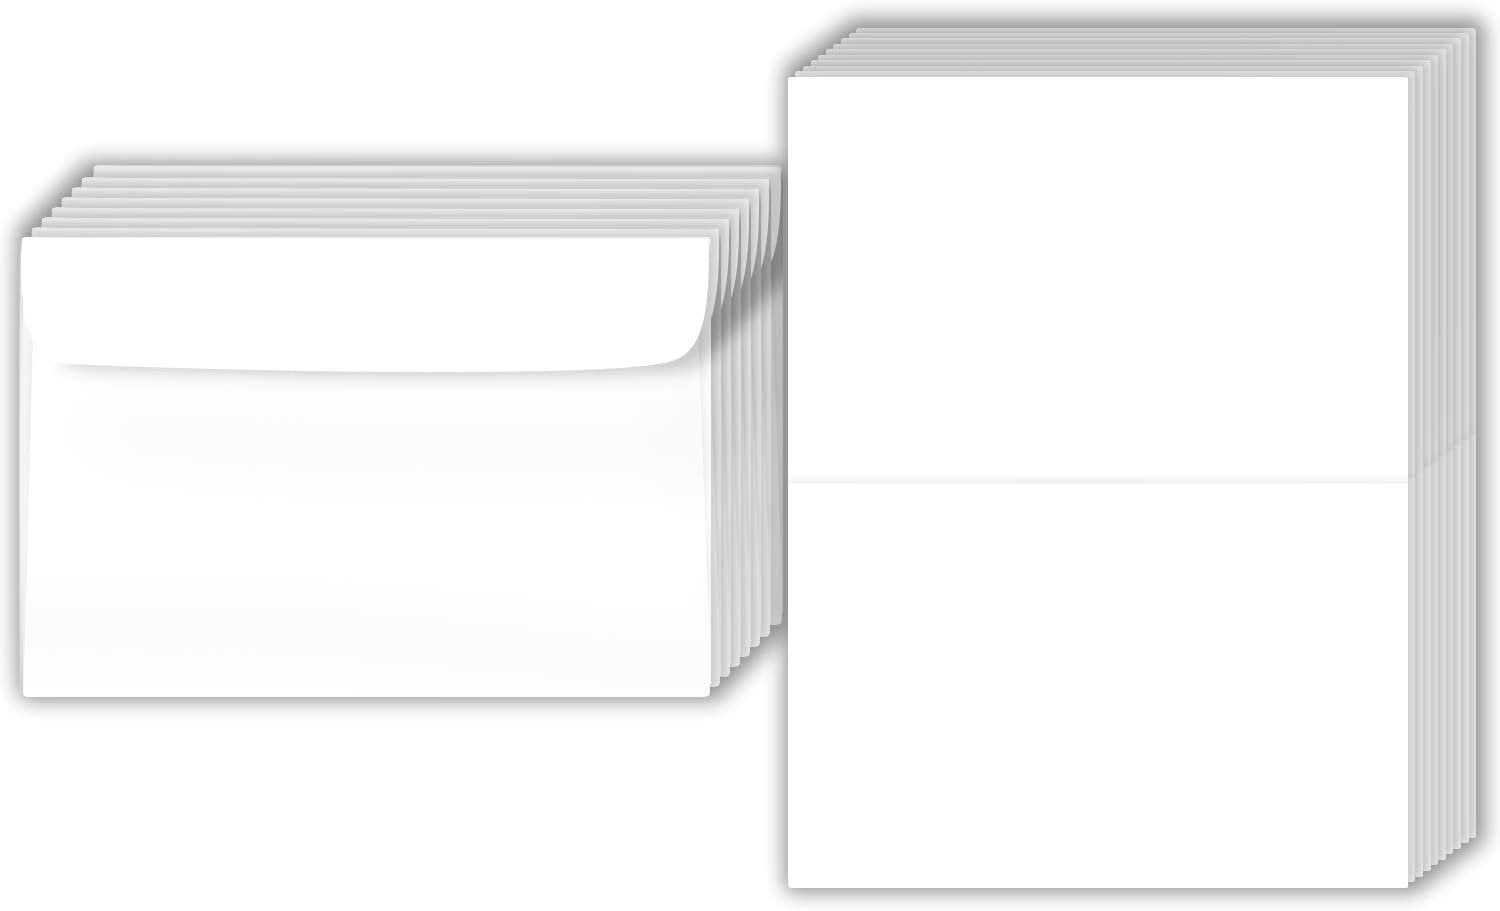 8 1/2 x 11 White Cardstock - Bulk and Wholesale - Fine Cardstock